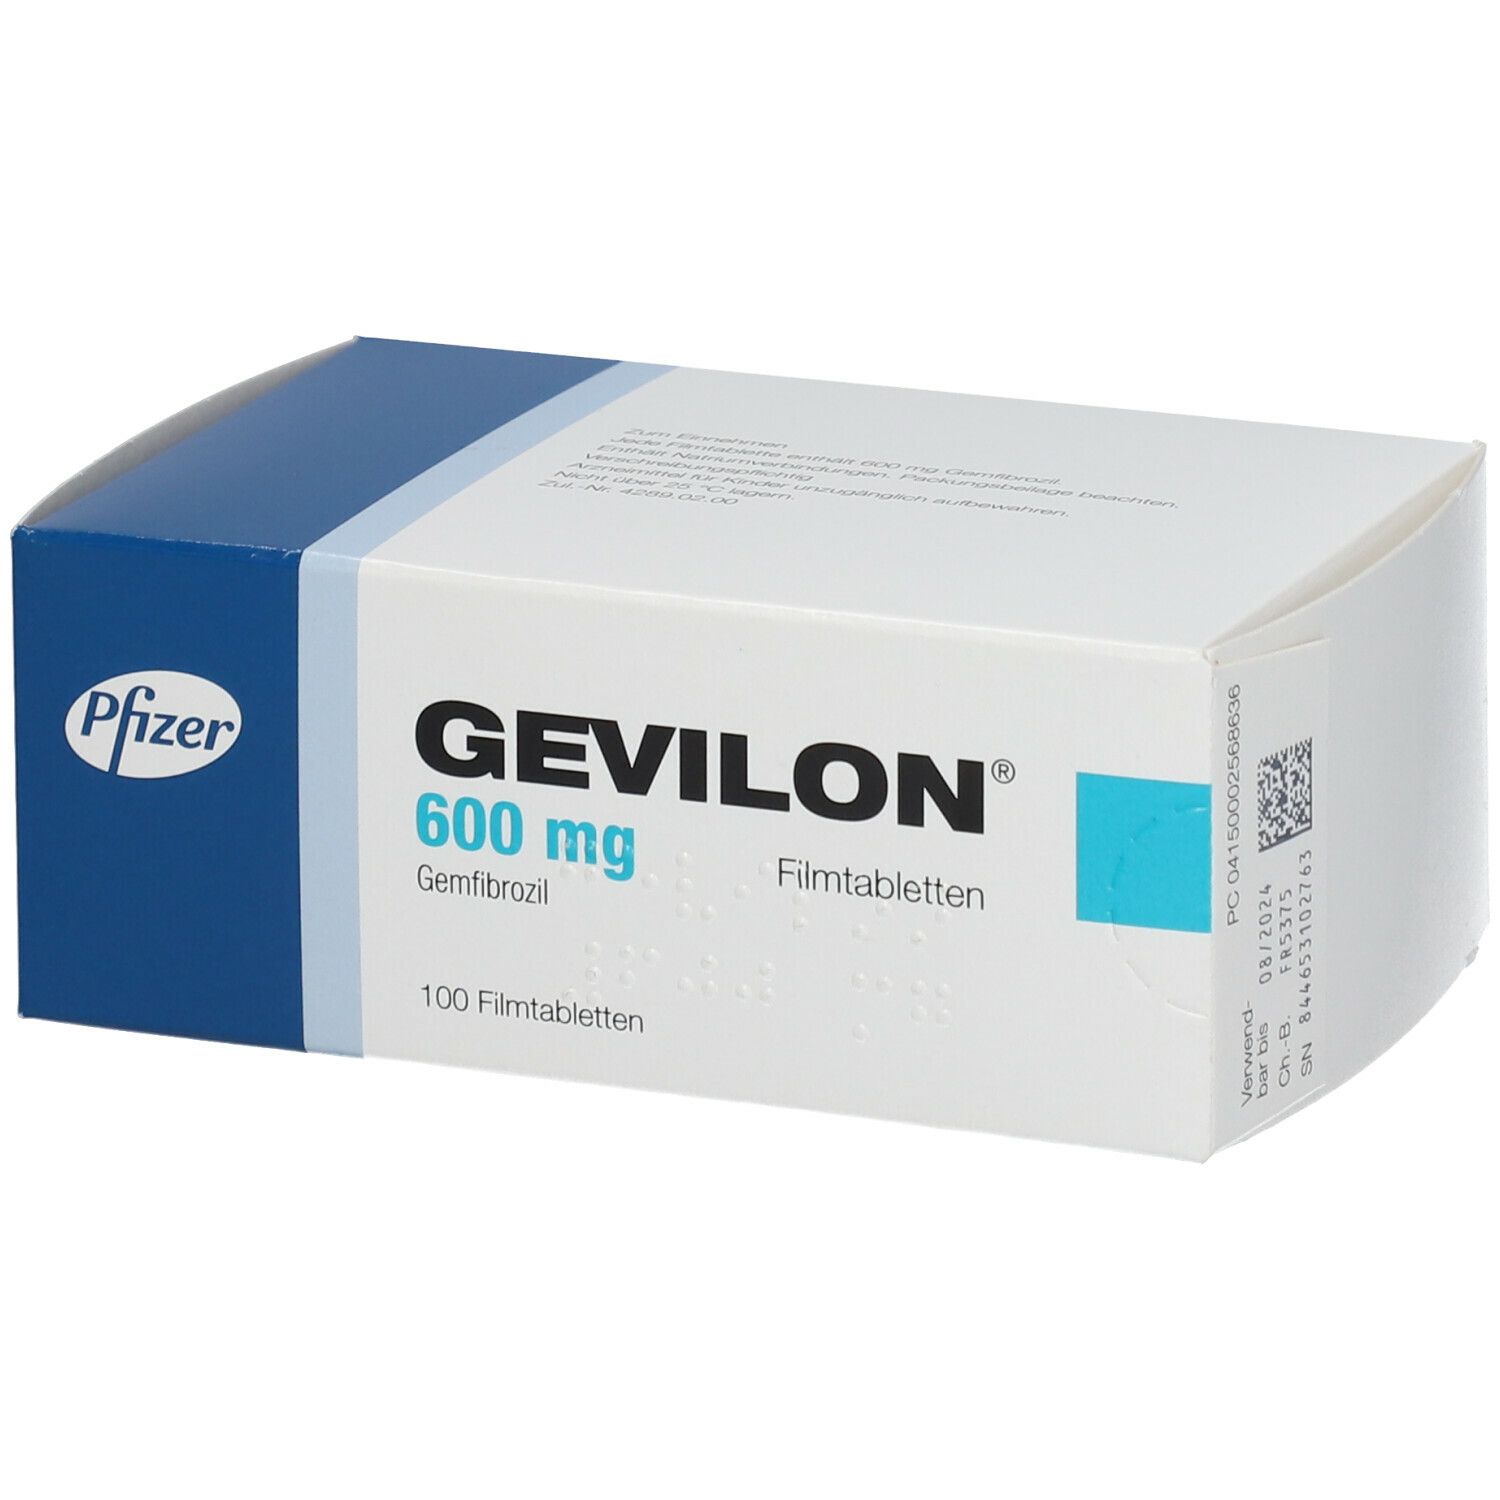 GEVILON® 600 mg